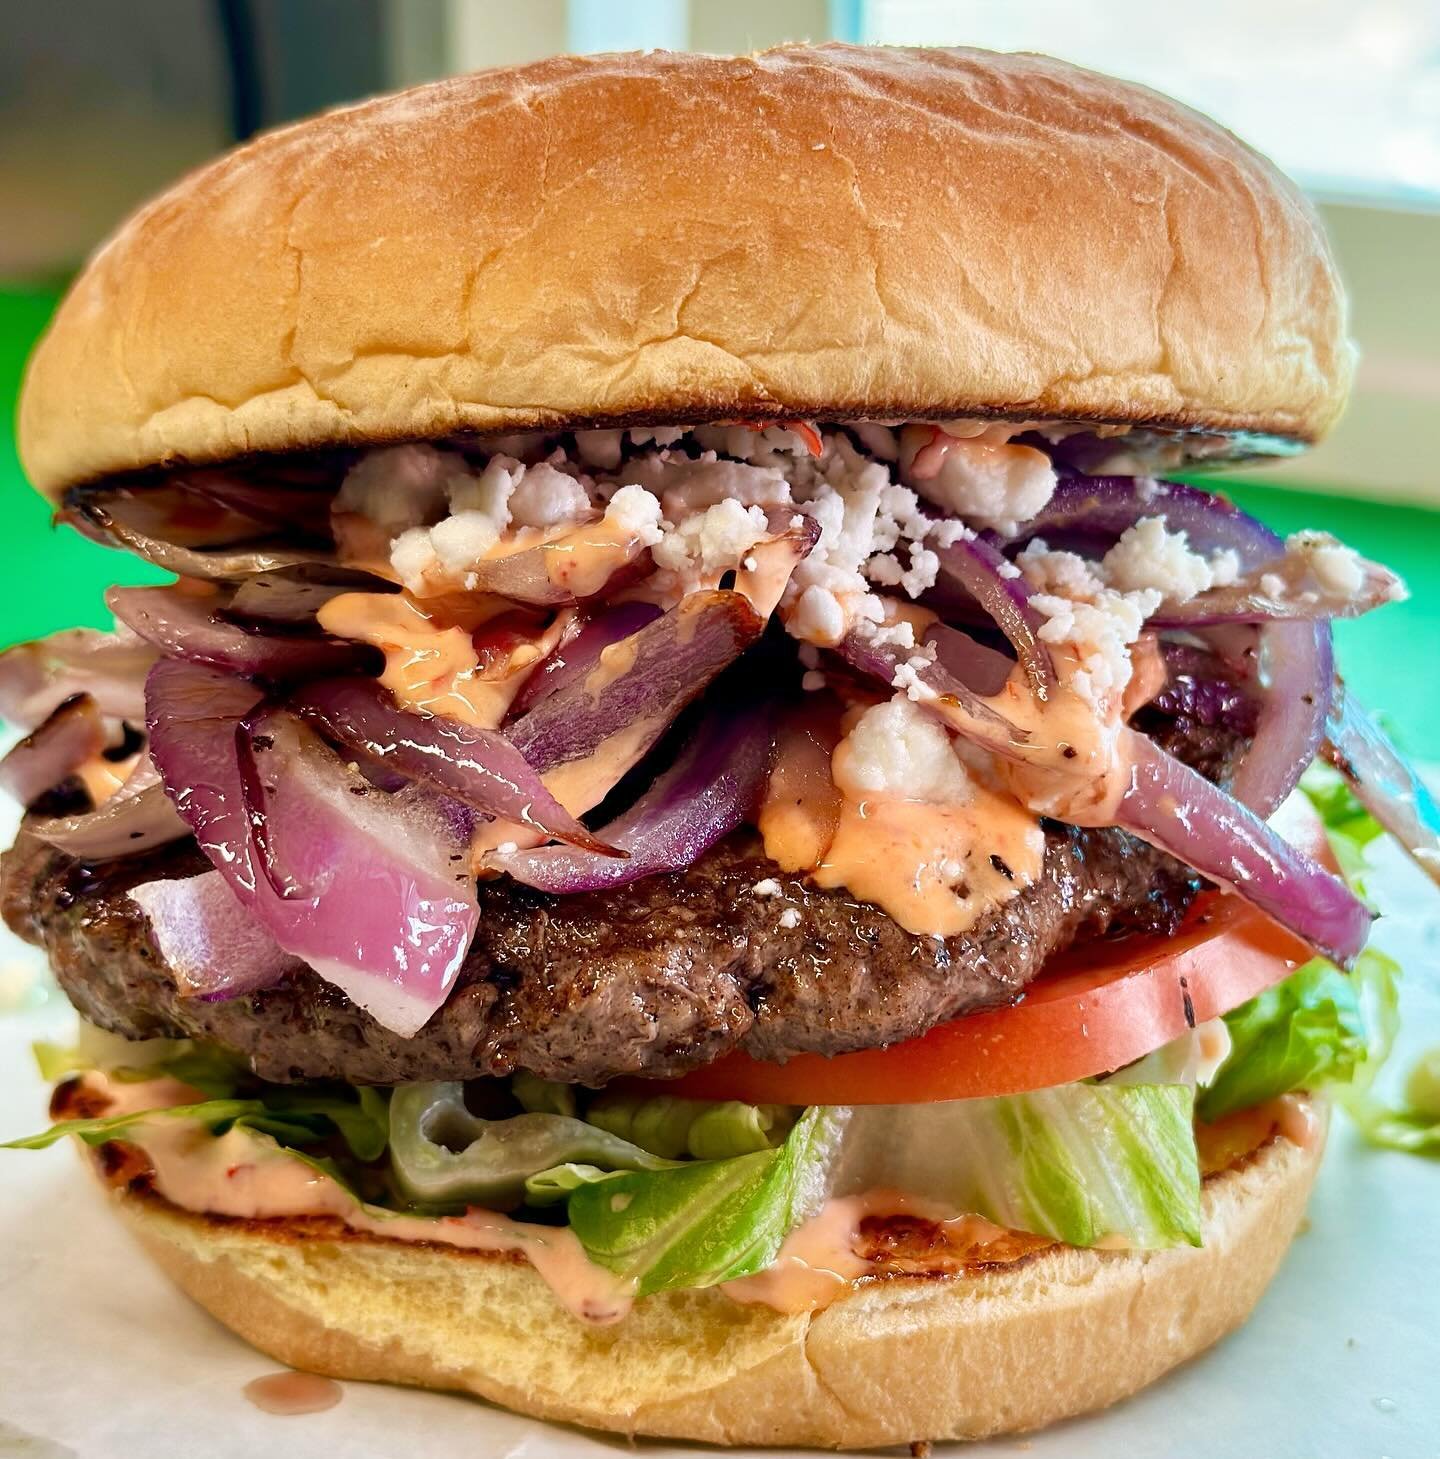 SPECIAL!!! 🤤🤤🤤

Wagyu-Short Rib Burger $16.95

Caramelized onions, feta cheese, shatta aioli, romaine, local buffalo tomato. 
@wailukufoodtrucks 
.
.
.
.
.
.
.
.
.
.
.
.
.
.
.
.
.
#burger #burgers #beef #burgercravings #juicyburger #mediterraneanf